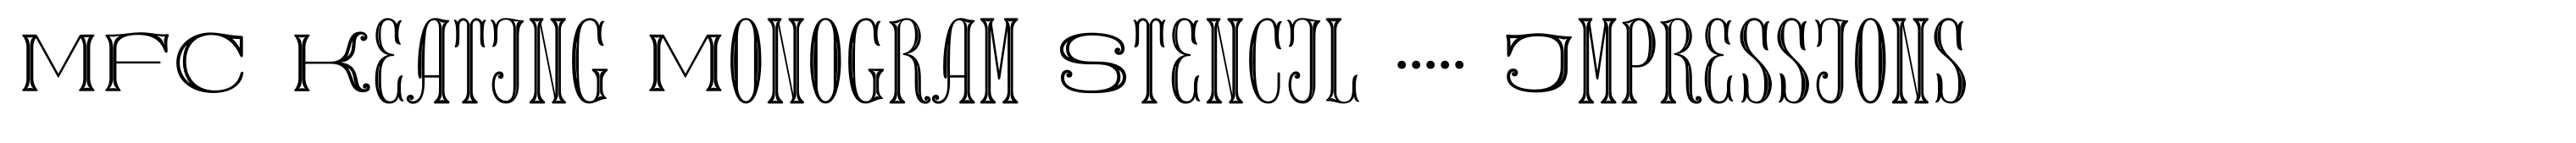 MFC Keating Monogram Stencil 25000 Impressions